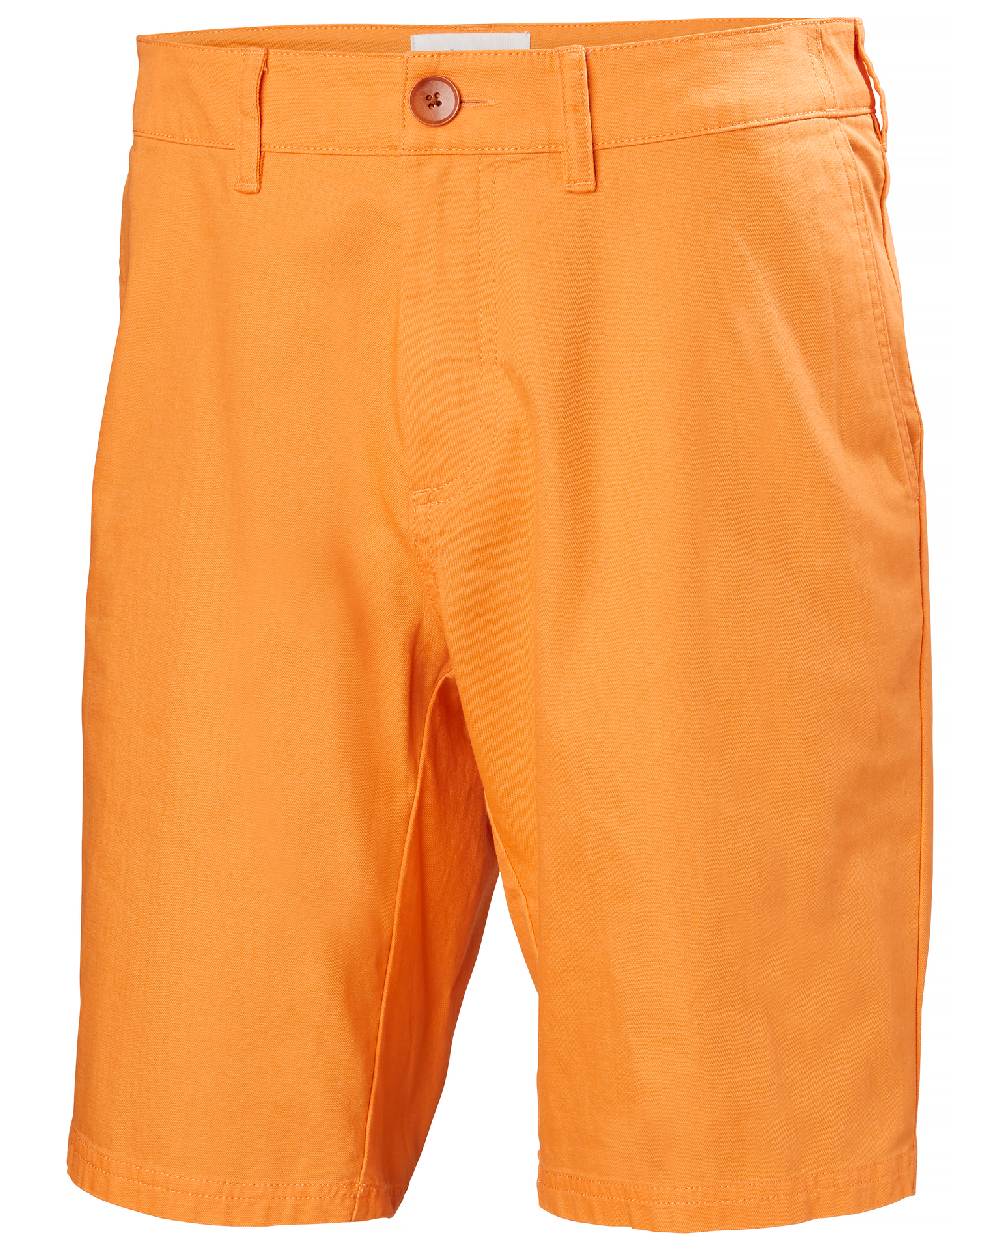 Poppy Orange coloured Helly Hansen Mens Dock Shorts on white background 